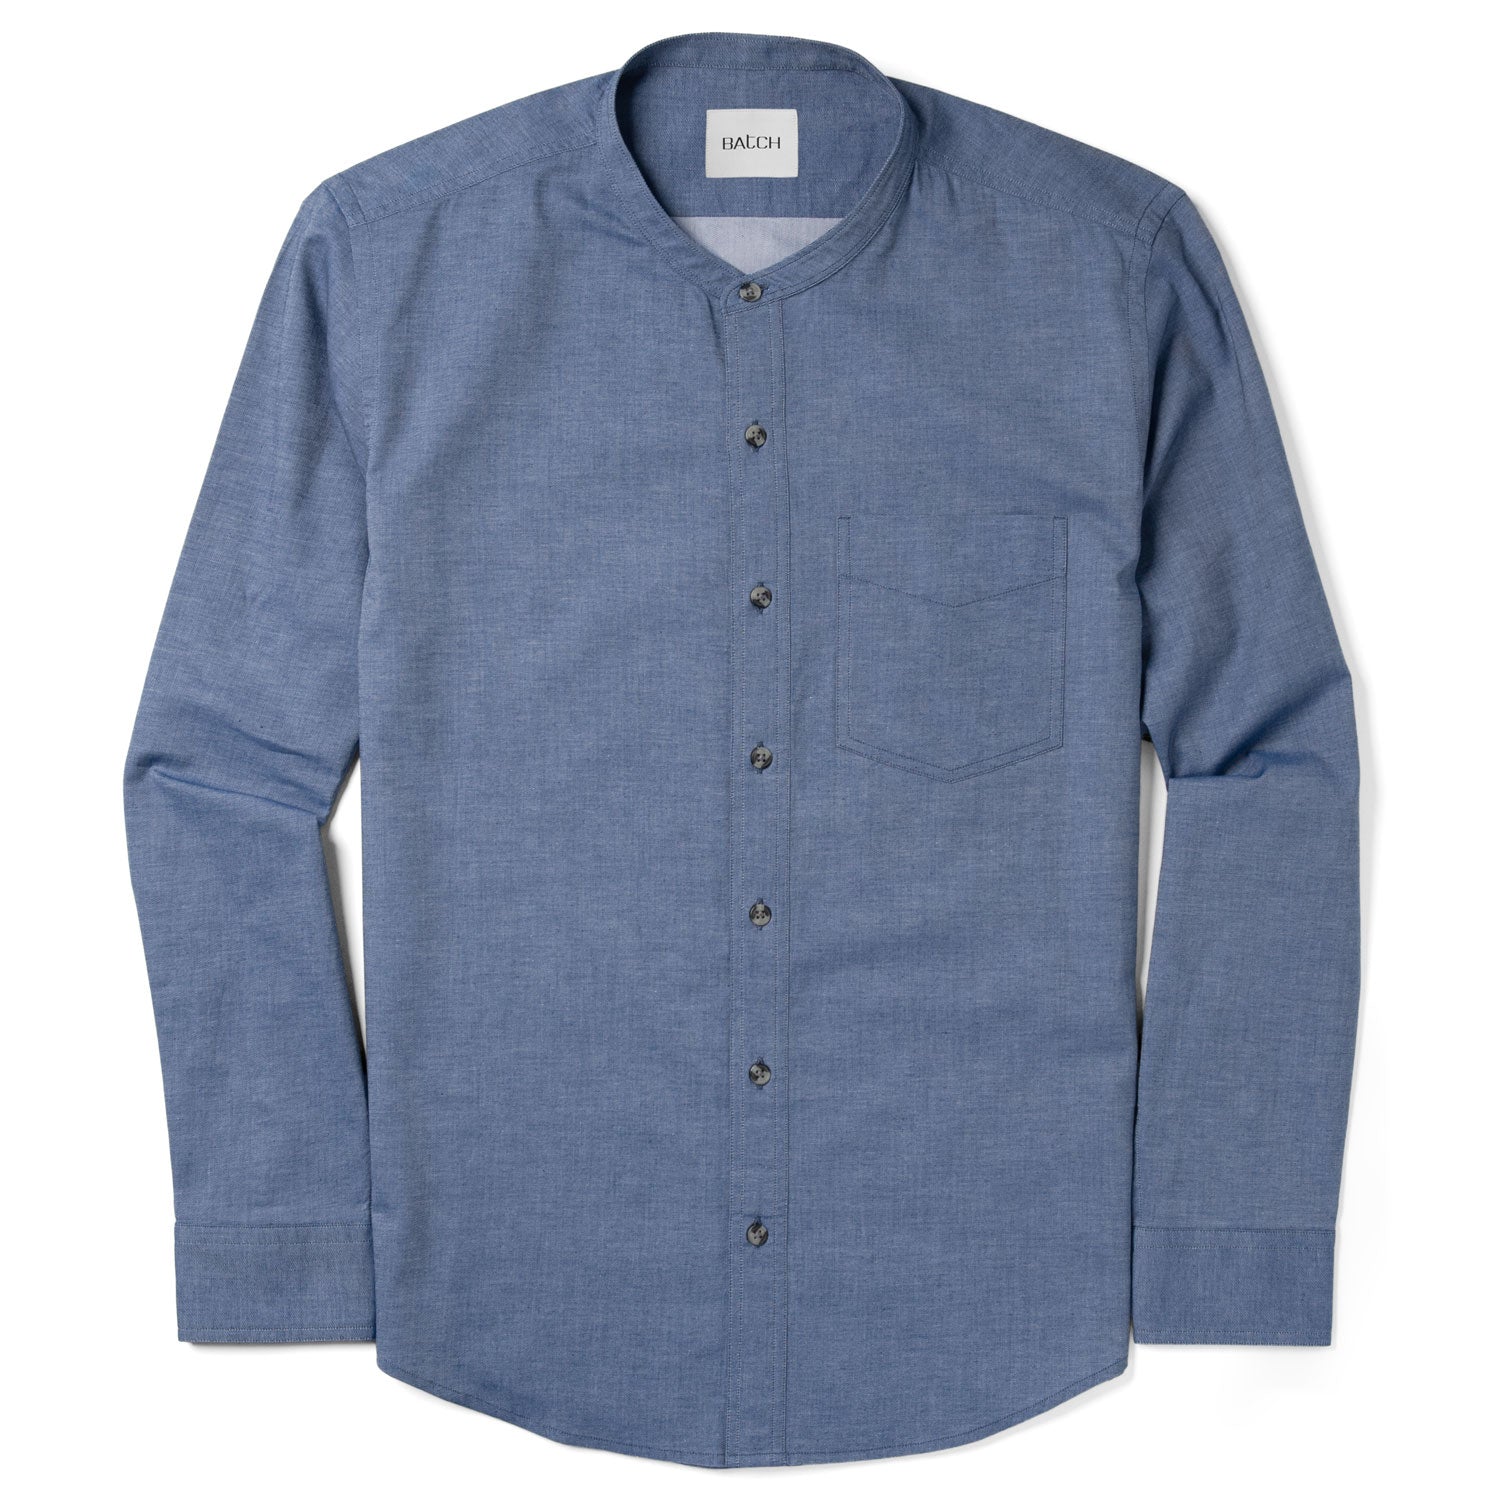 Denim Blue Grandfather Shirt For Men Made by Civilian, XX-Large -  Walmart.com